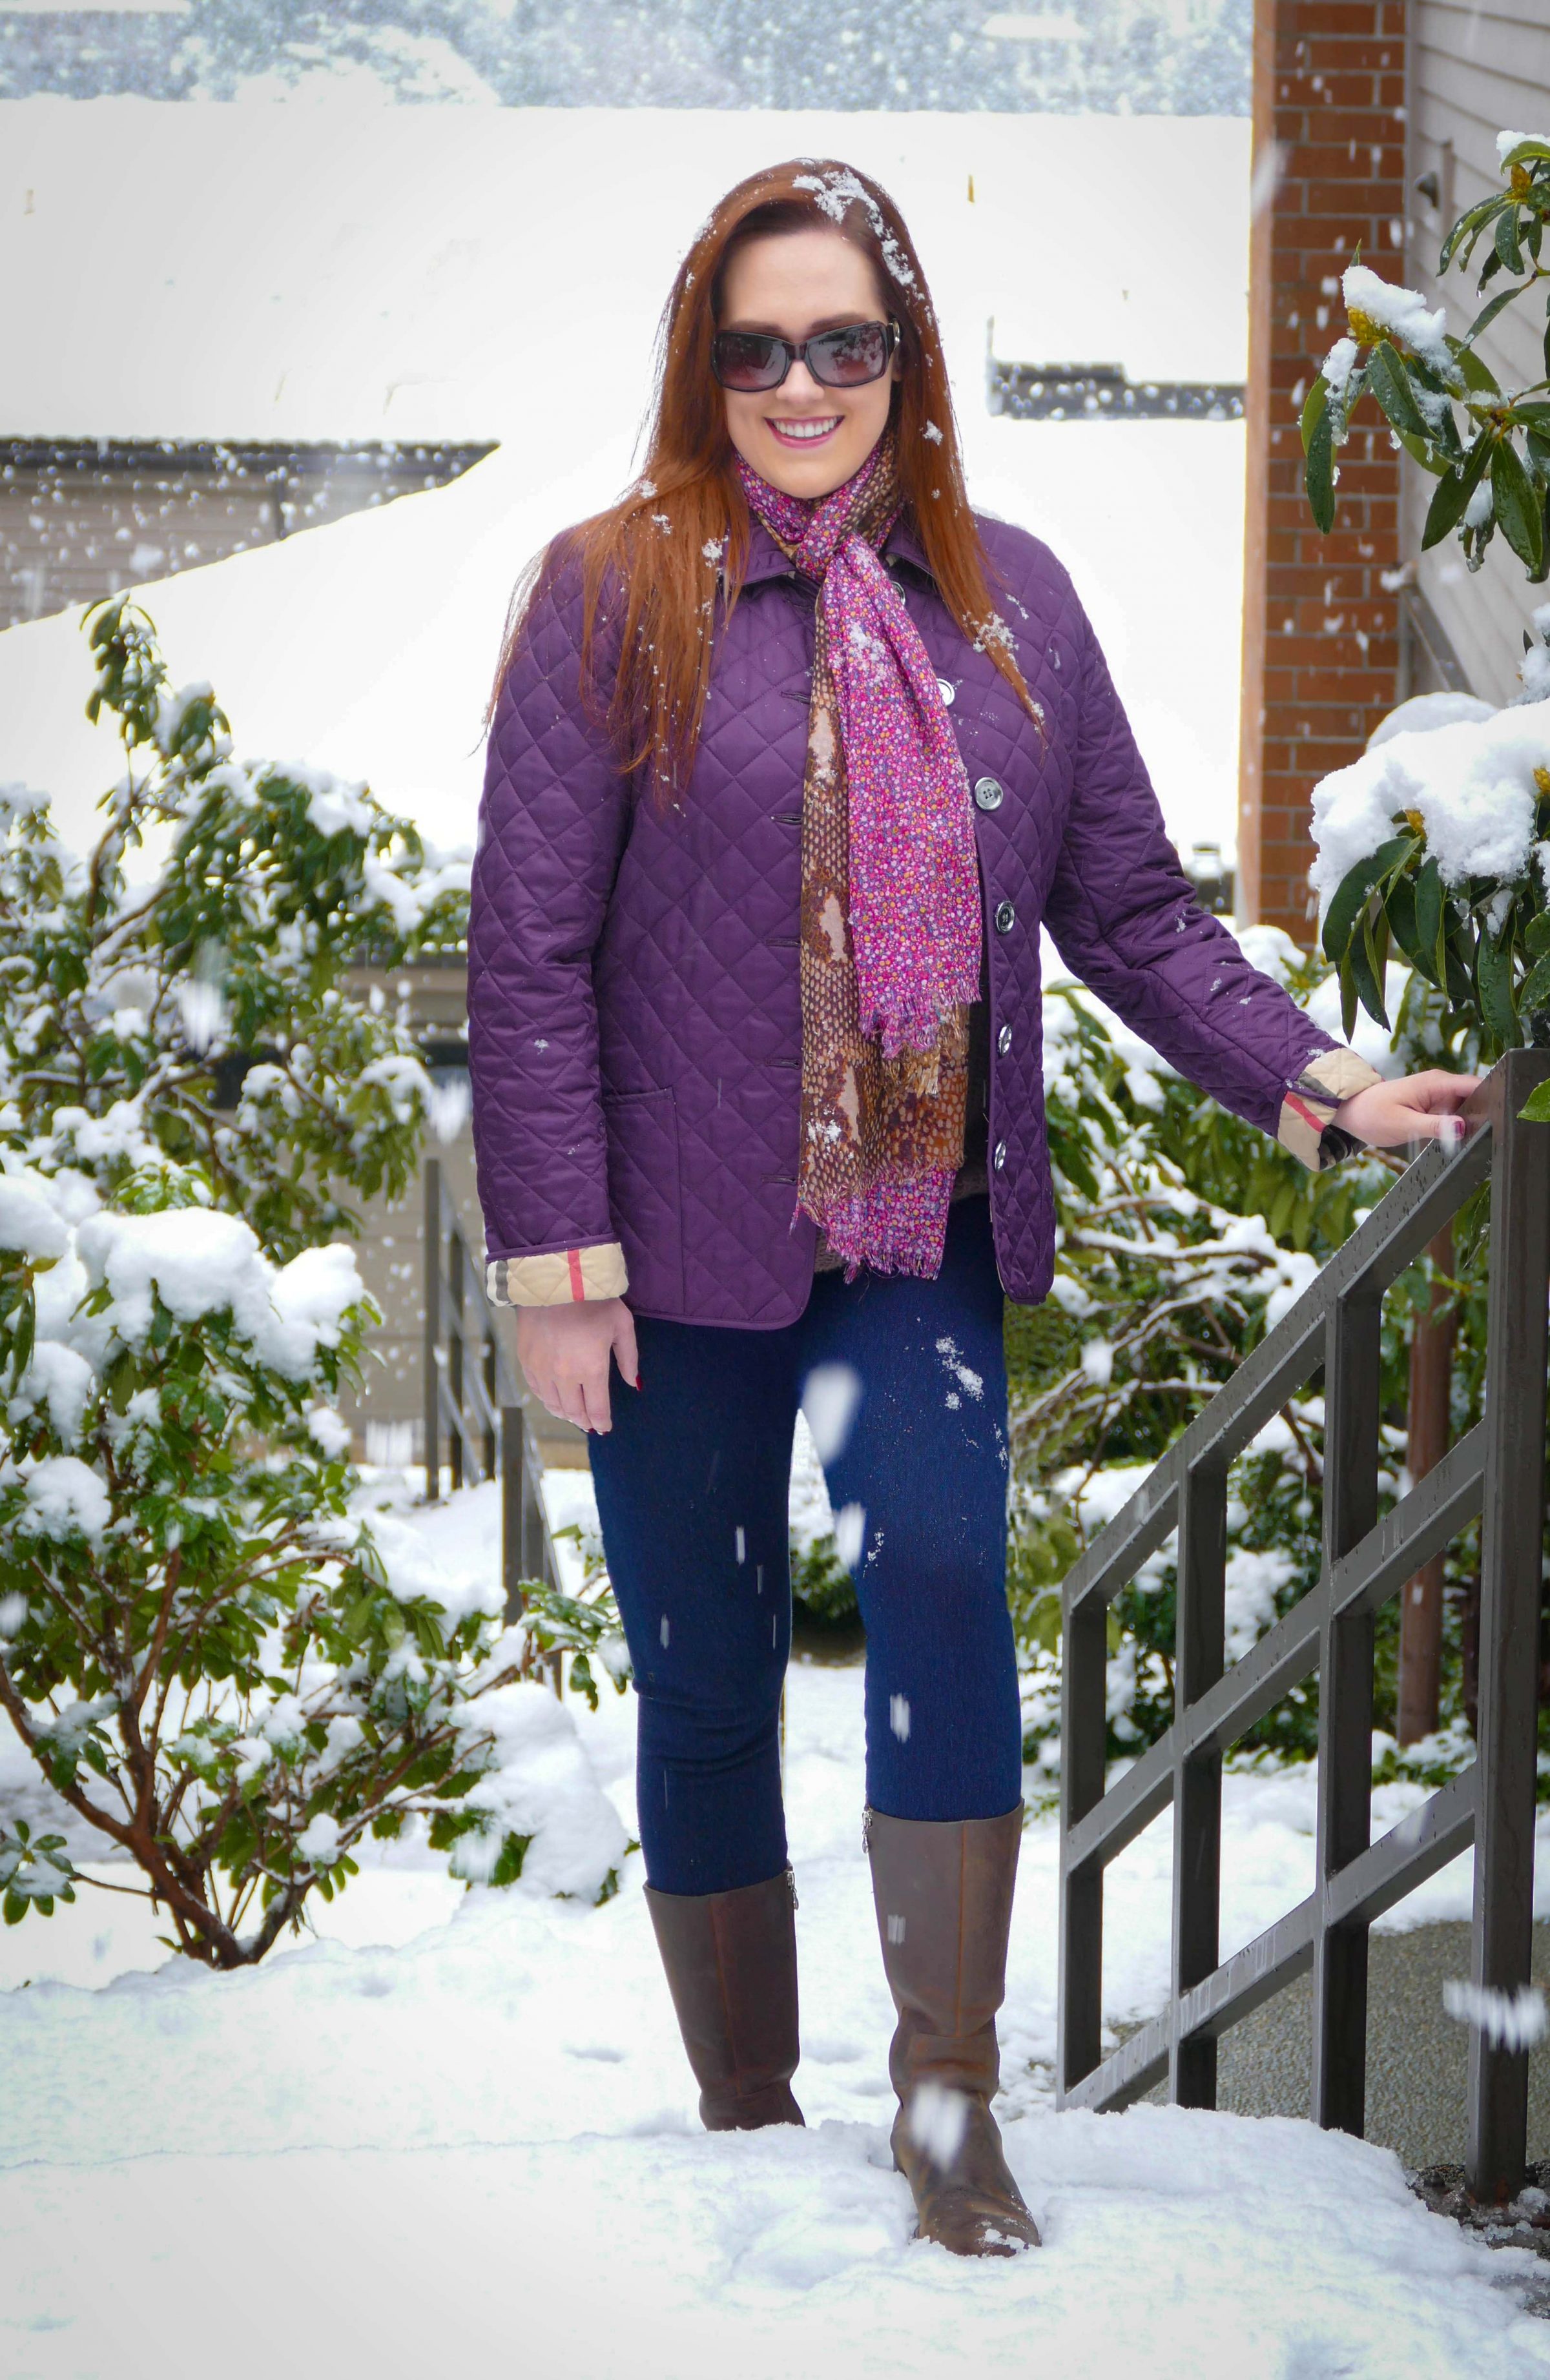 Snowing in Seattle - Katherine Chloe Cahoon E